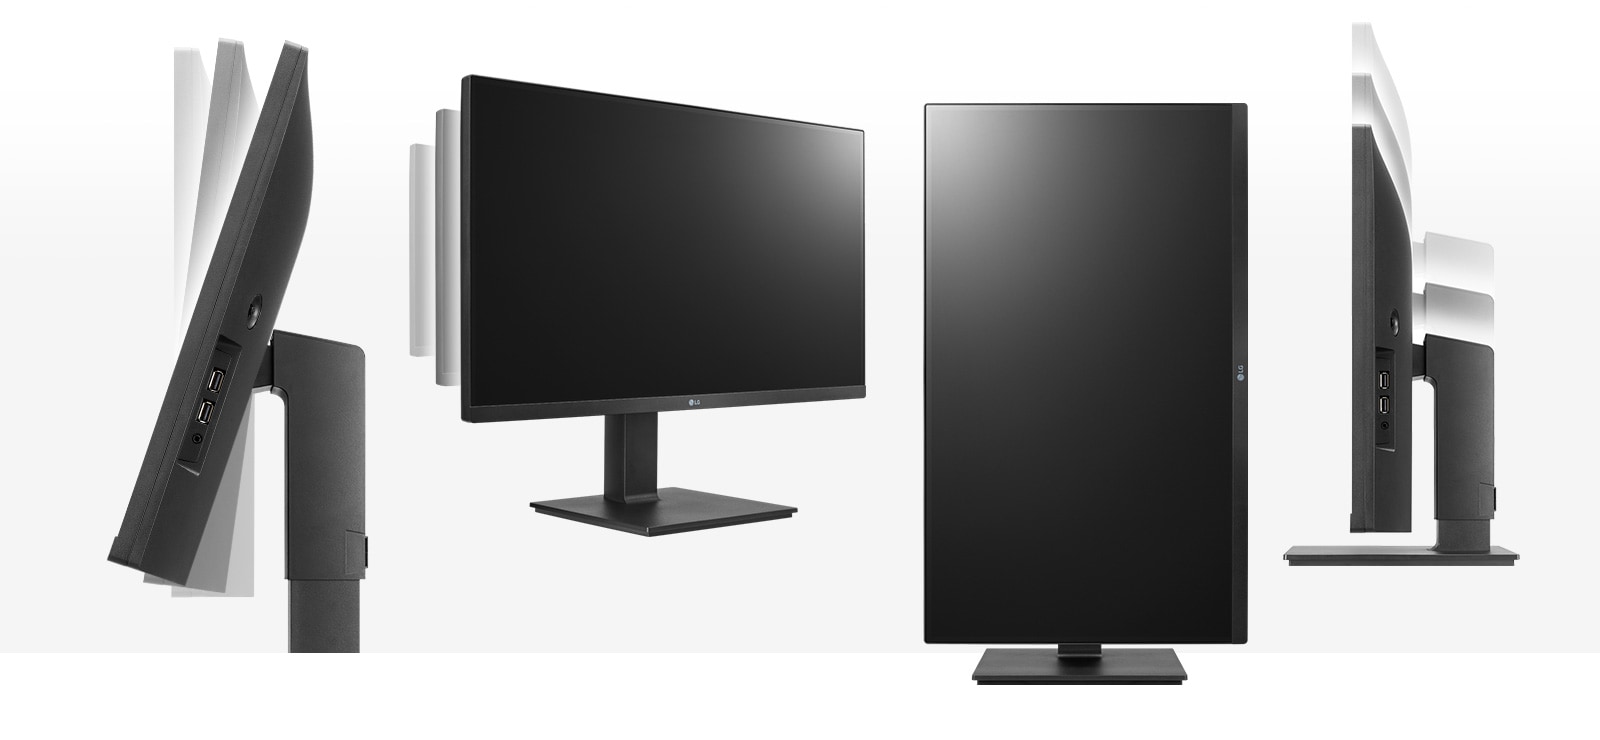 the monitor in the ergonomic design supporting tilt, swivel, pivot and height adjustment options. LG 27BQ75QB-B monitor komponentko enaa